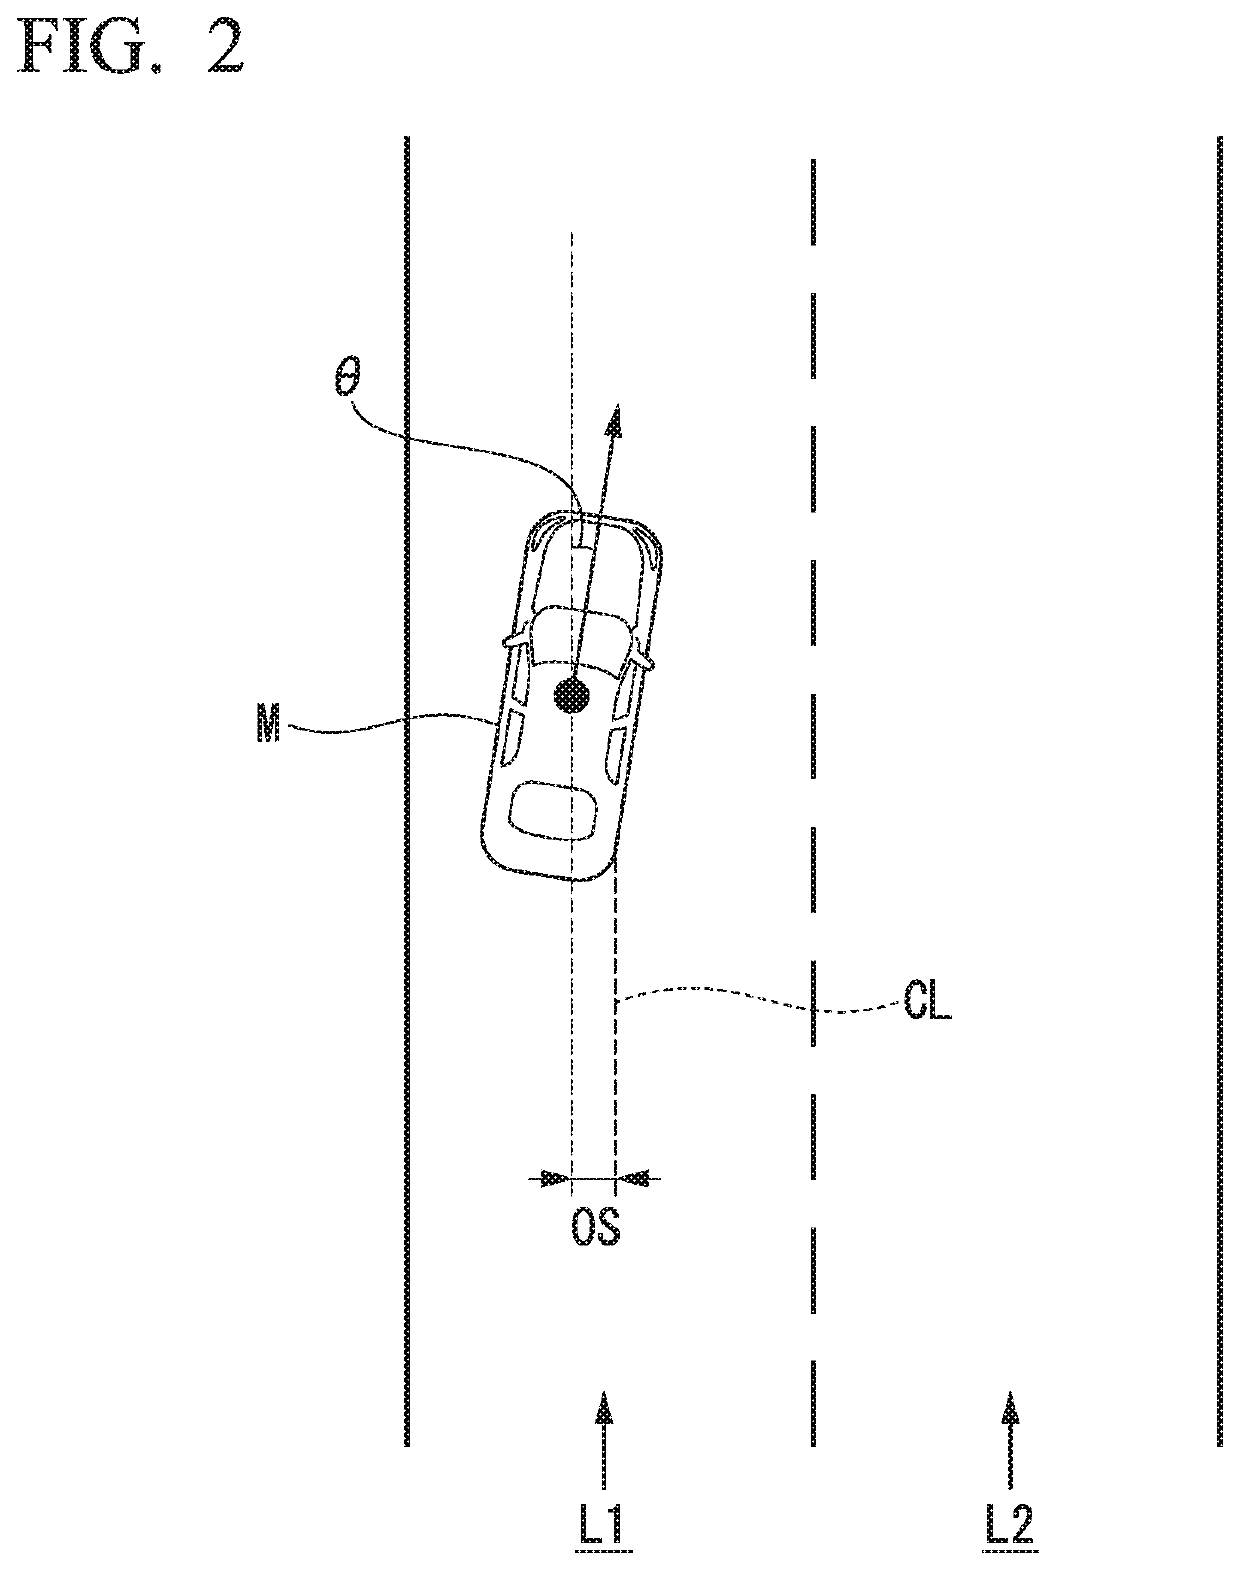 Vehicle controller, vehicle control method, and storage medium